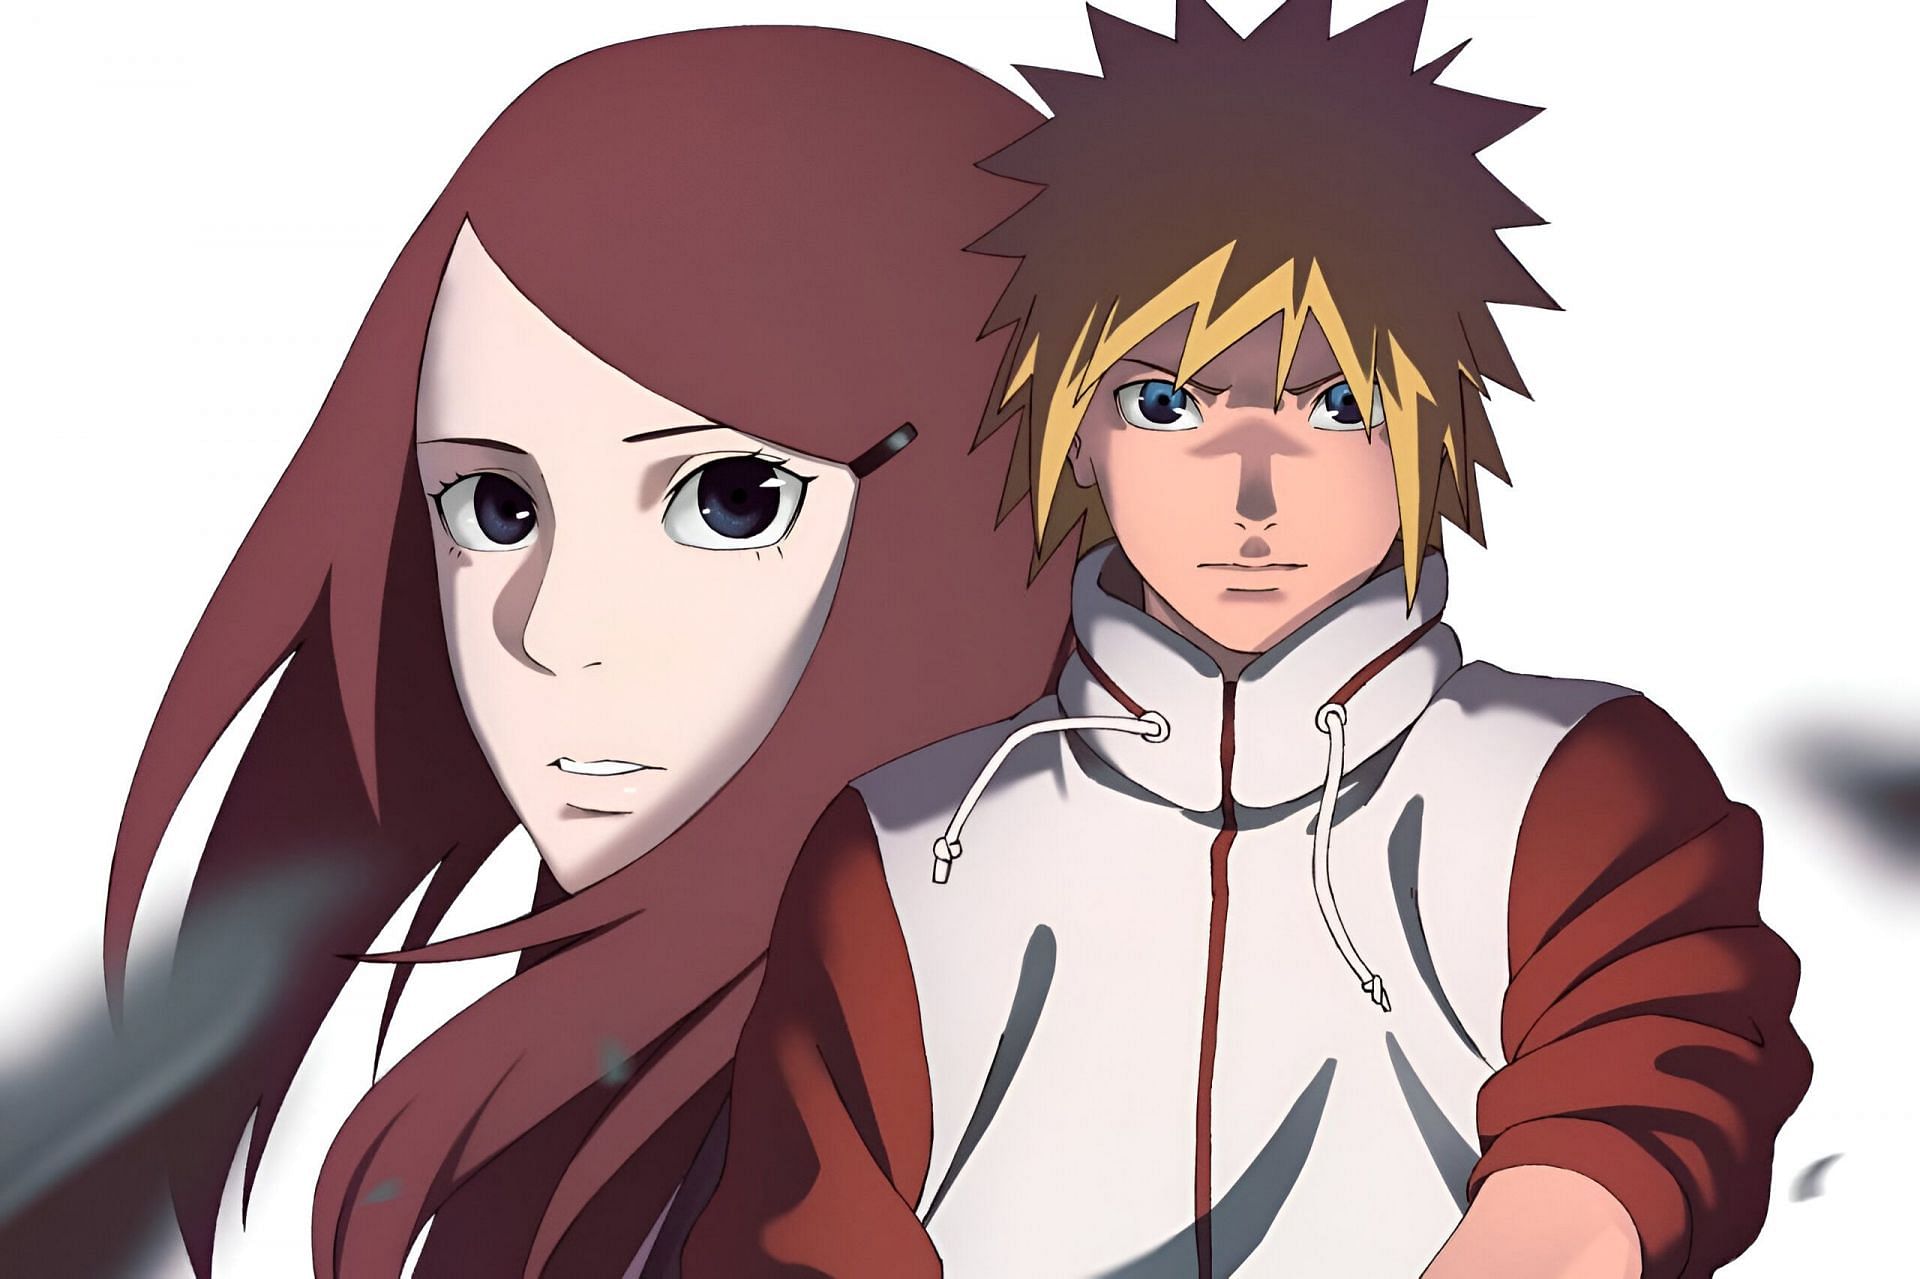 Minato One Shot receives a fan animation before the Naruto remake (Image via Galactic Republic Studio)